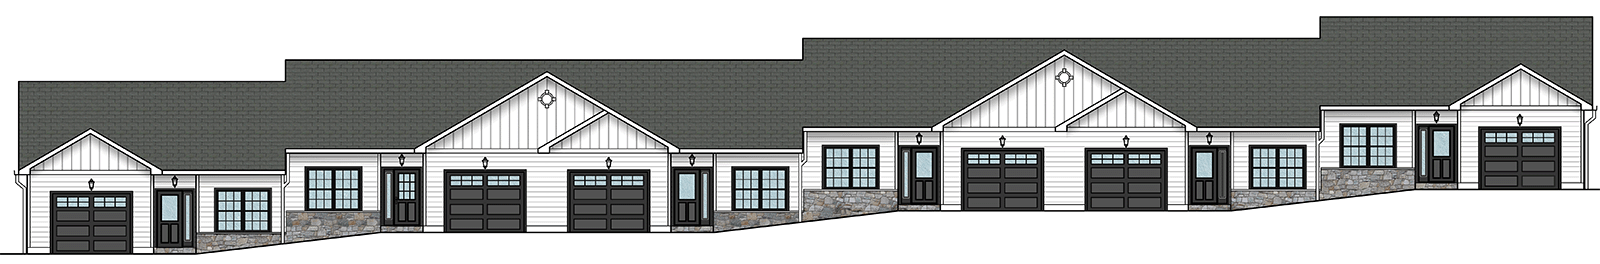 image of Homestead Senior Apartments rendering